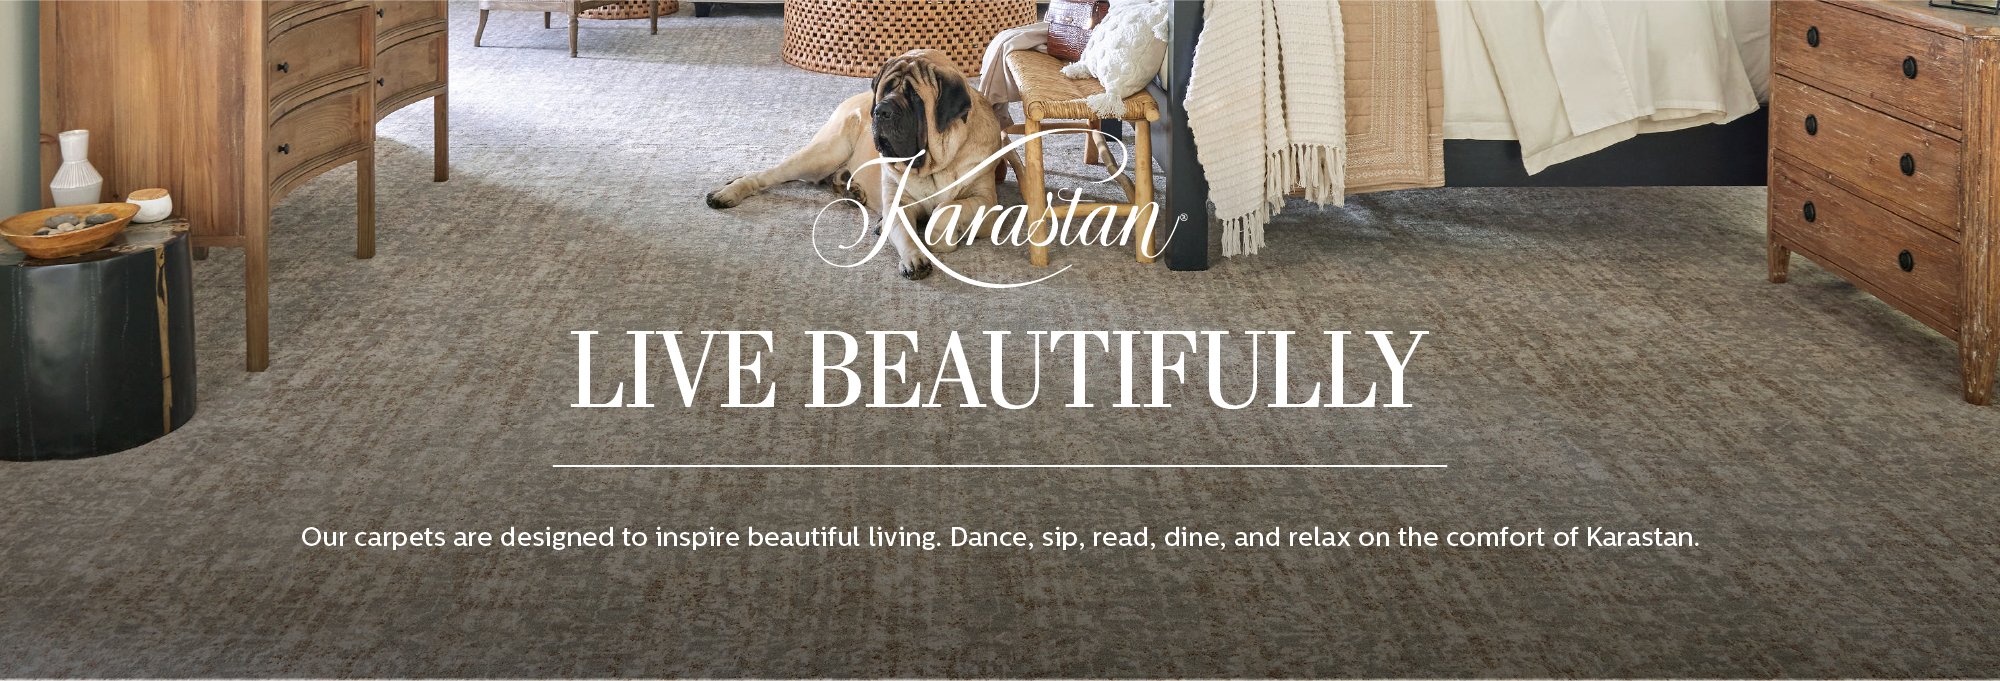 Browse Karastan products